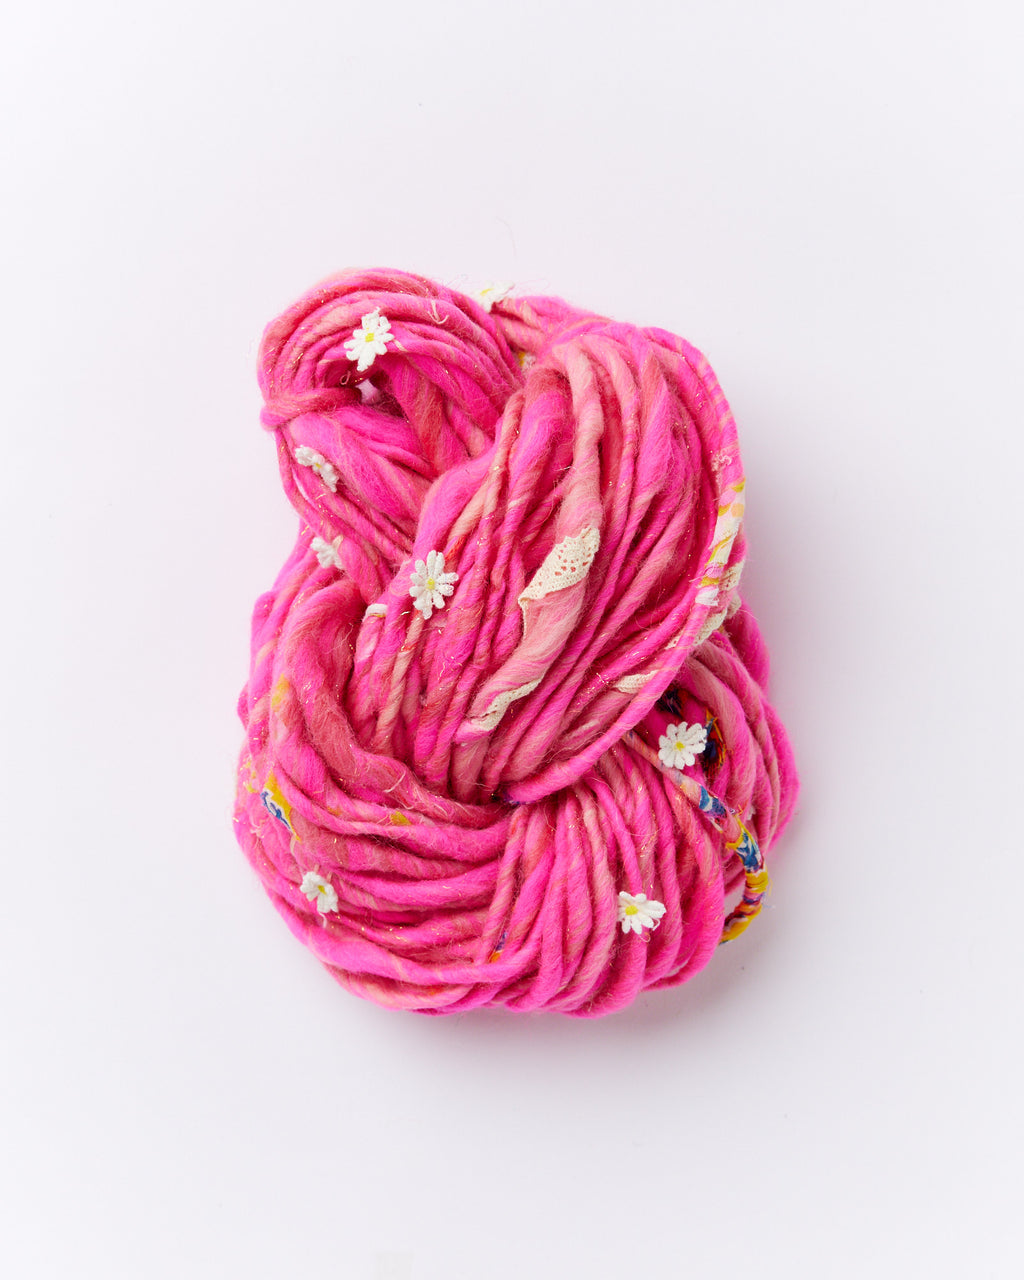 Daisy Chain Yarn in Full Fuchsia by Knit Collage - Chunky bulky Hand knitting yarn